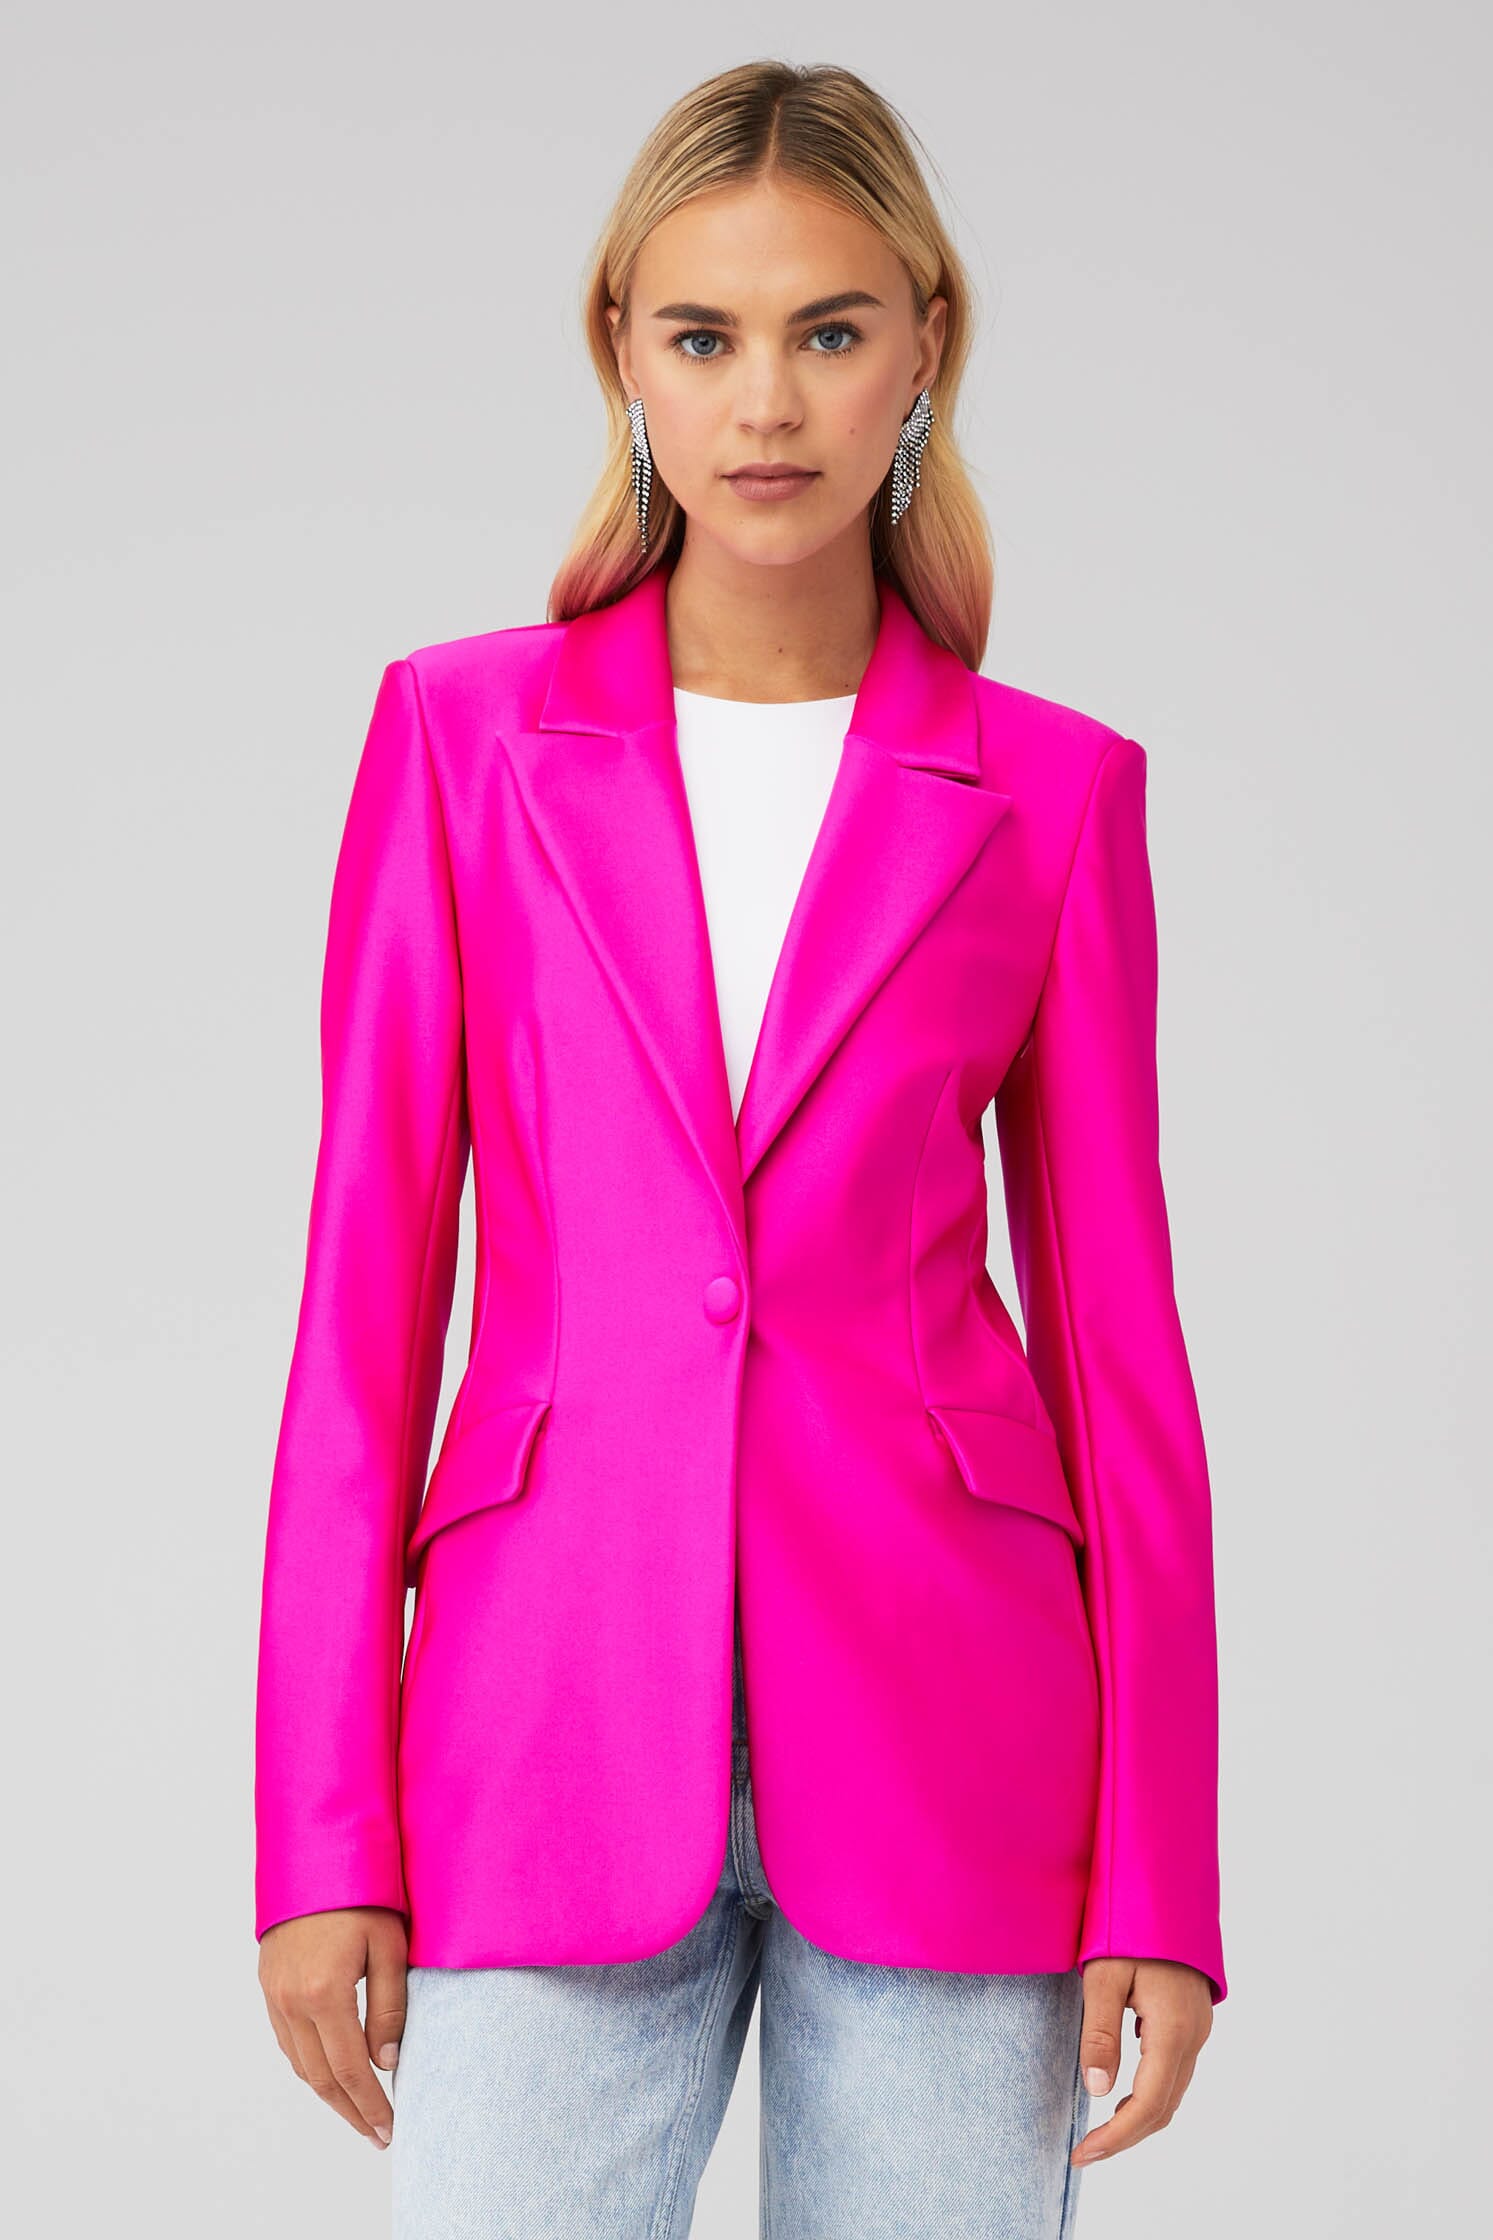 https://images.fashionpass.com/products/compression-shine-blazer-good-american-fuchsia-pink-bf5-1.jpg?profile=a